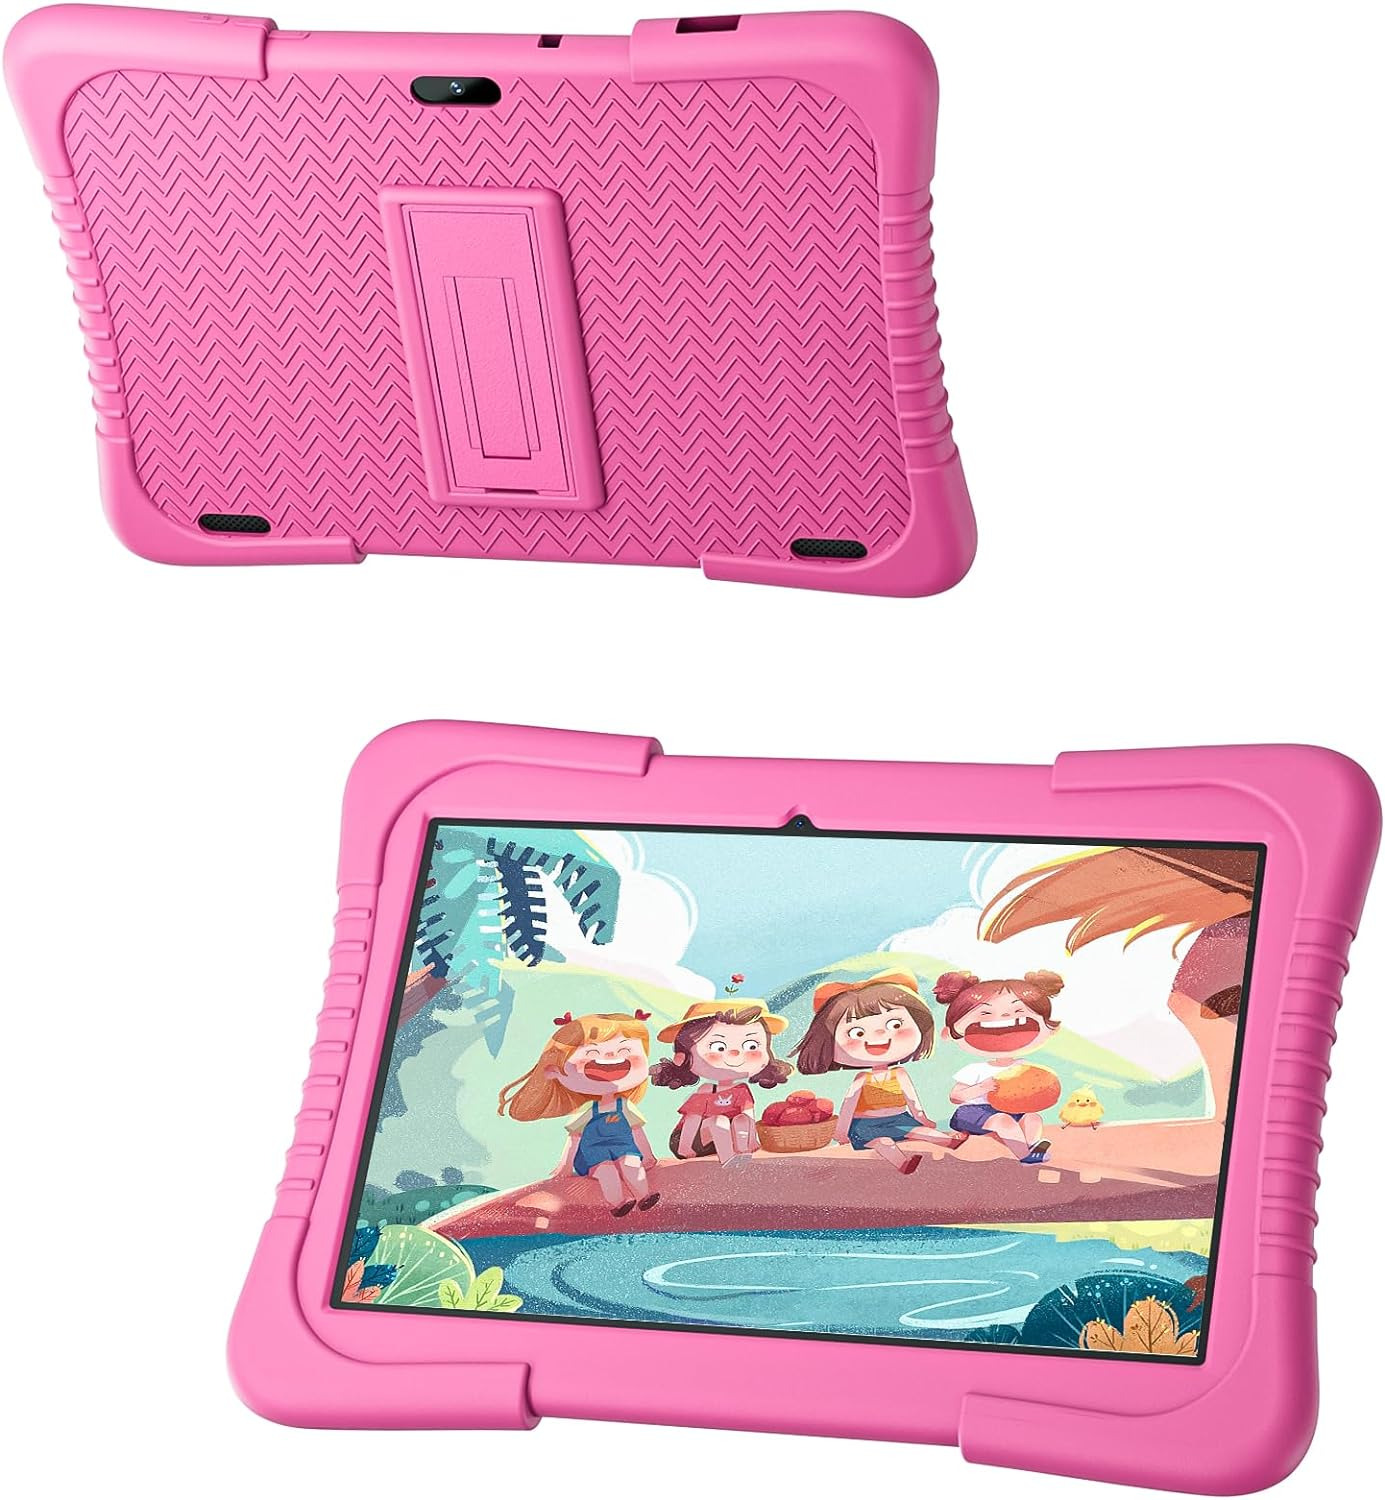 SGIN Kids Tablet 10 Inch 2GB RAM 64GB ROM with Parental Control Dual Camera Game